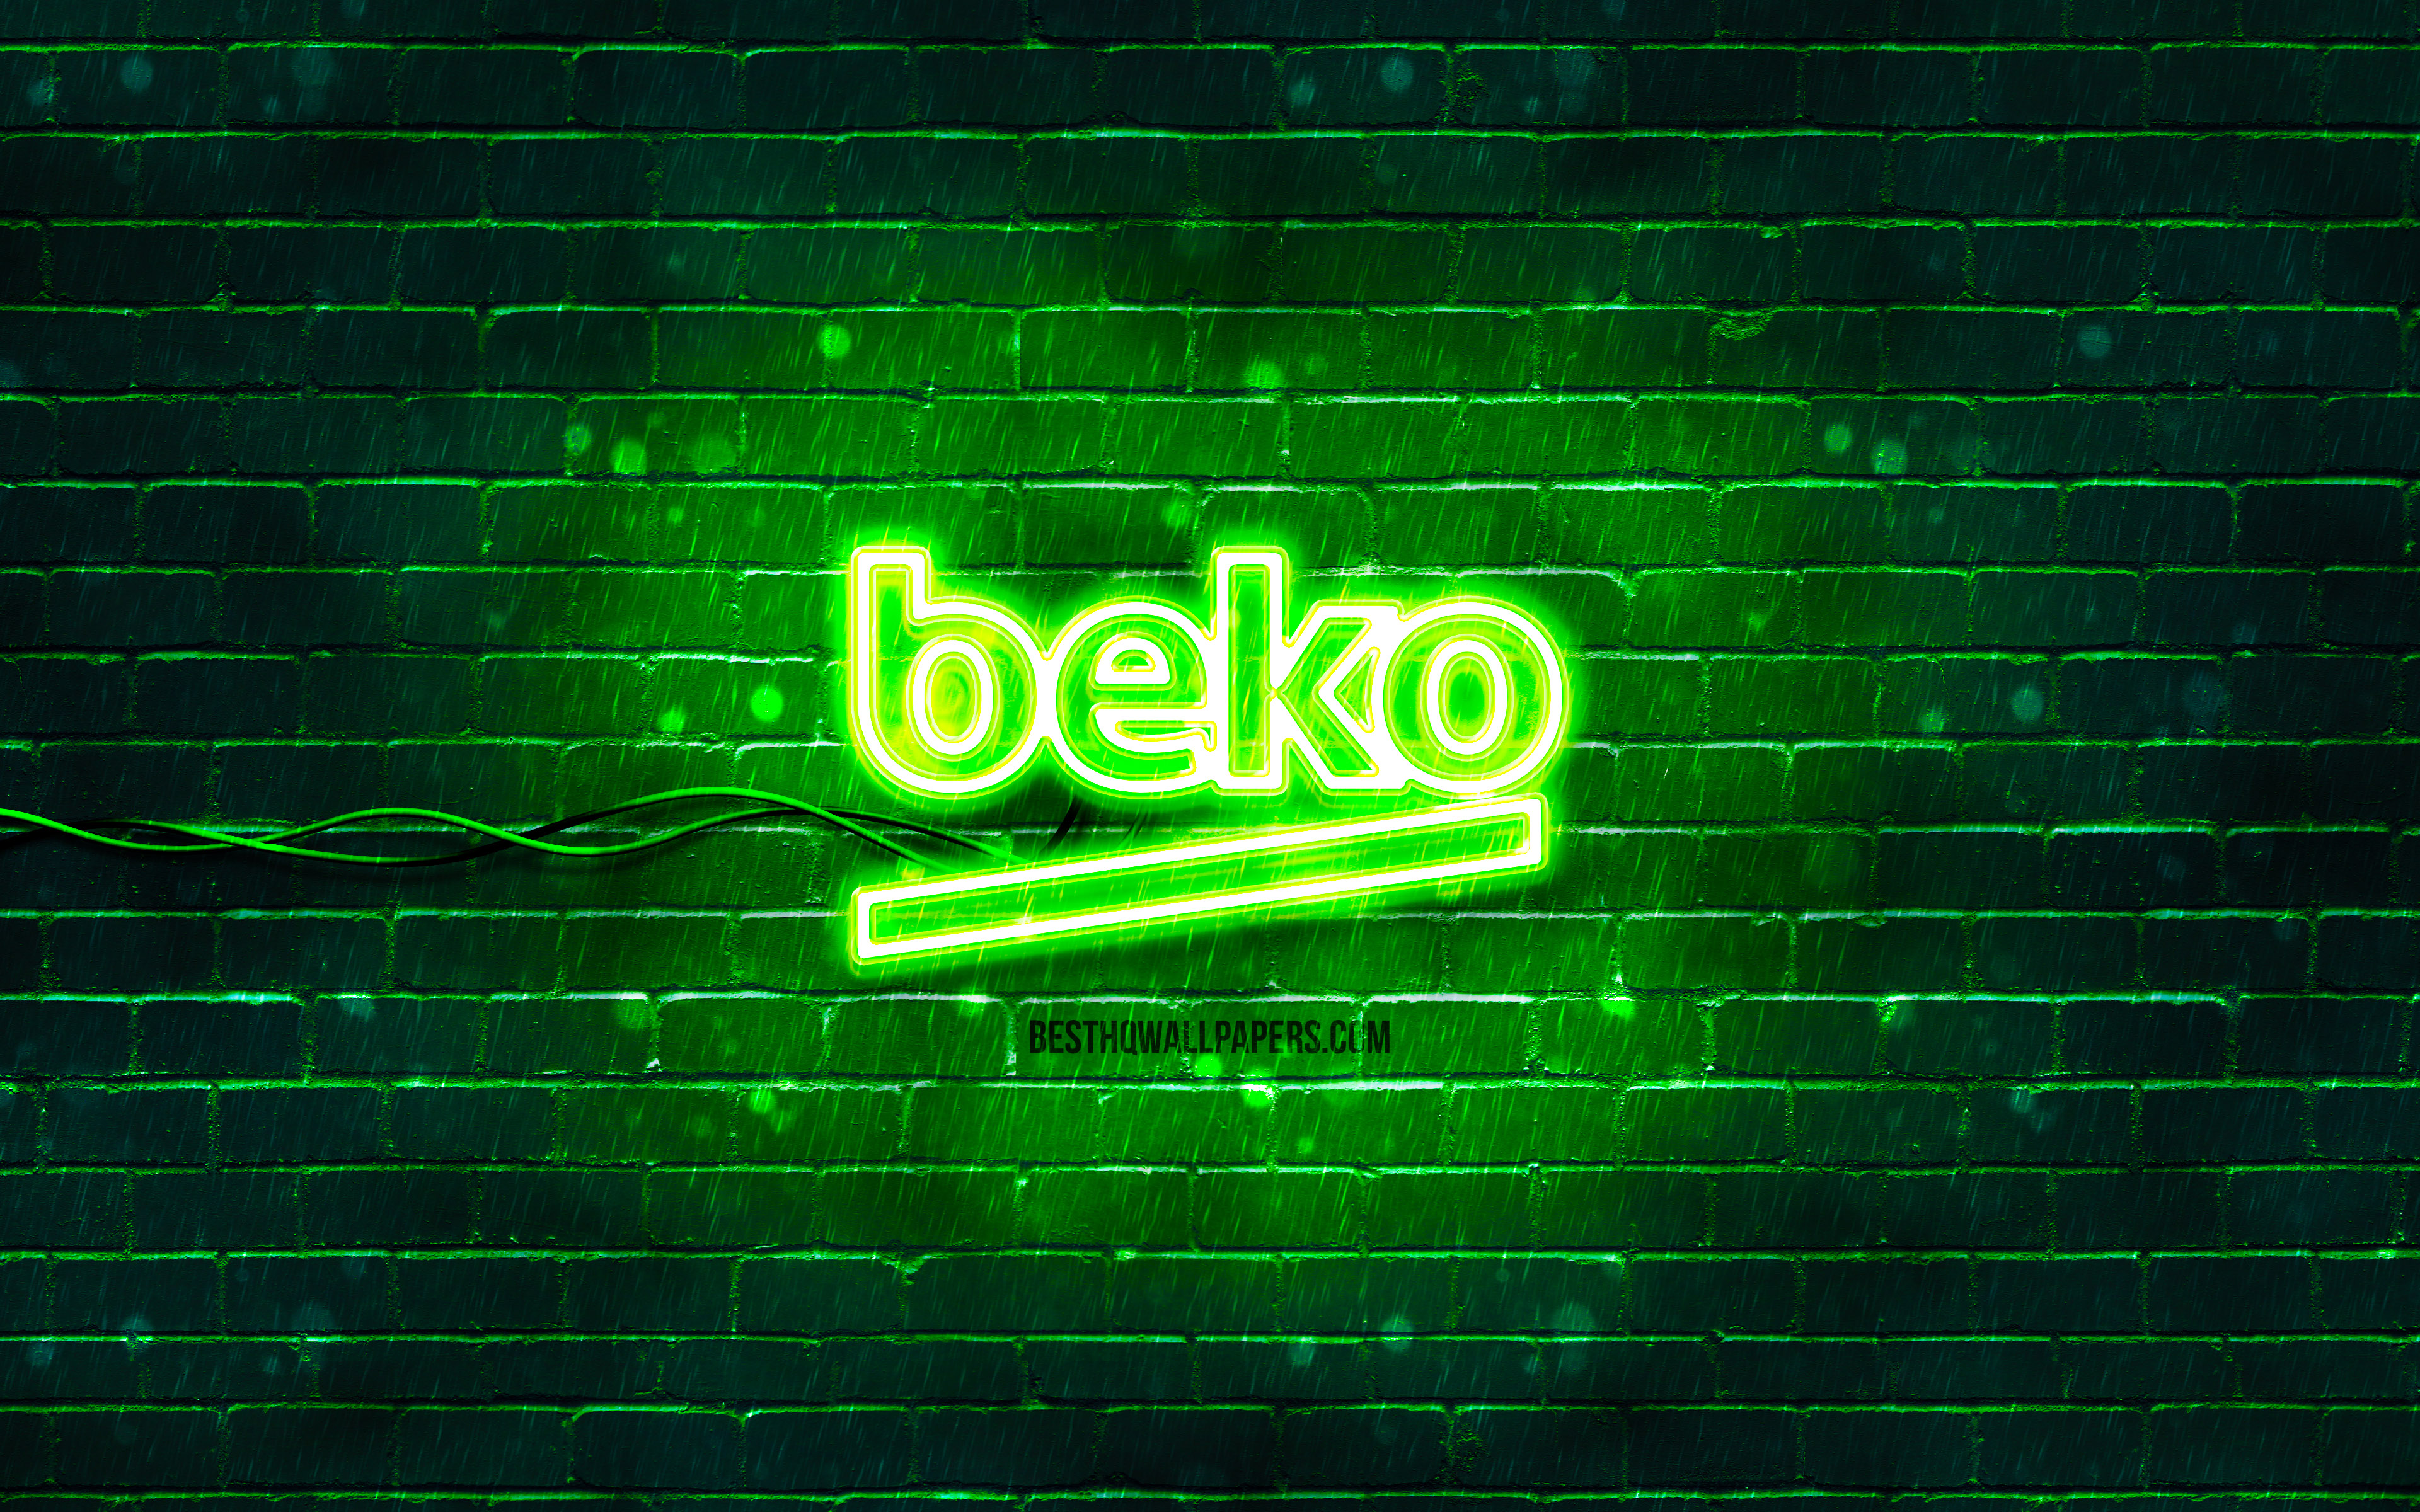 Download wallpaper Beko green logo, 4k, green brickwall, Beko logo, brands, Beko neon logo, Beko for desktop with resolution 3840x2400. High Quality HD picture wallpaper